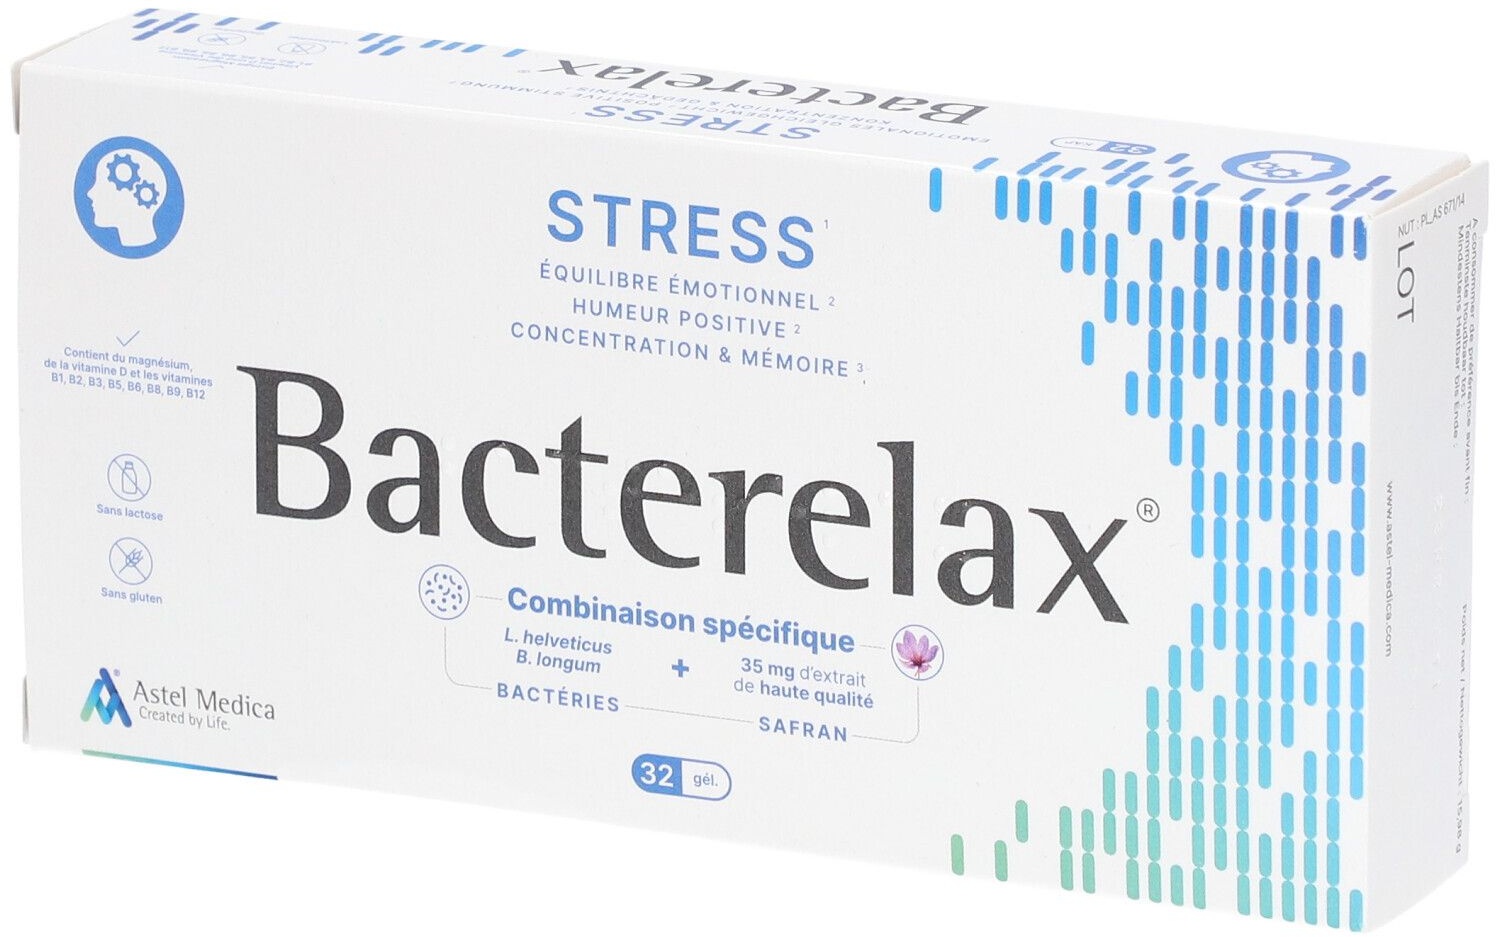 Astel Medica Bacterelax Stress